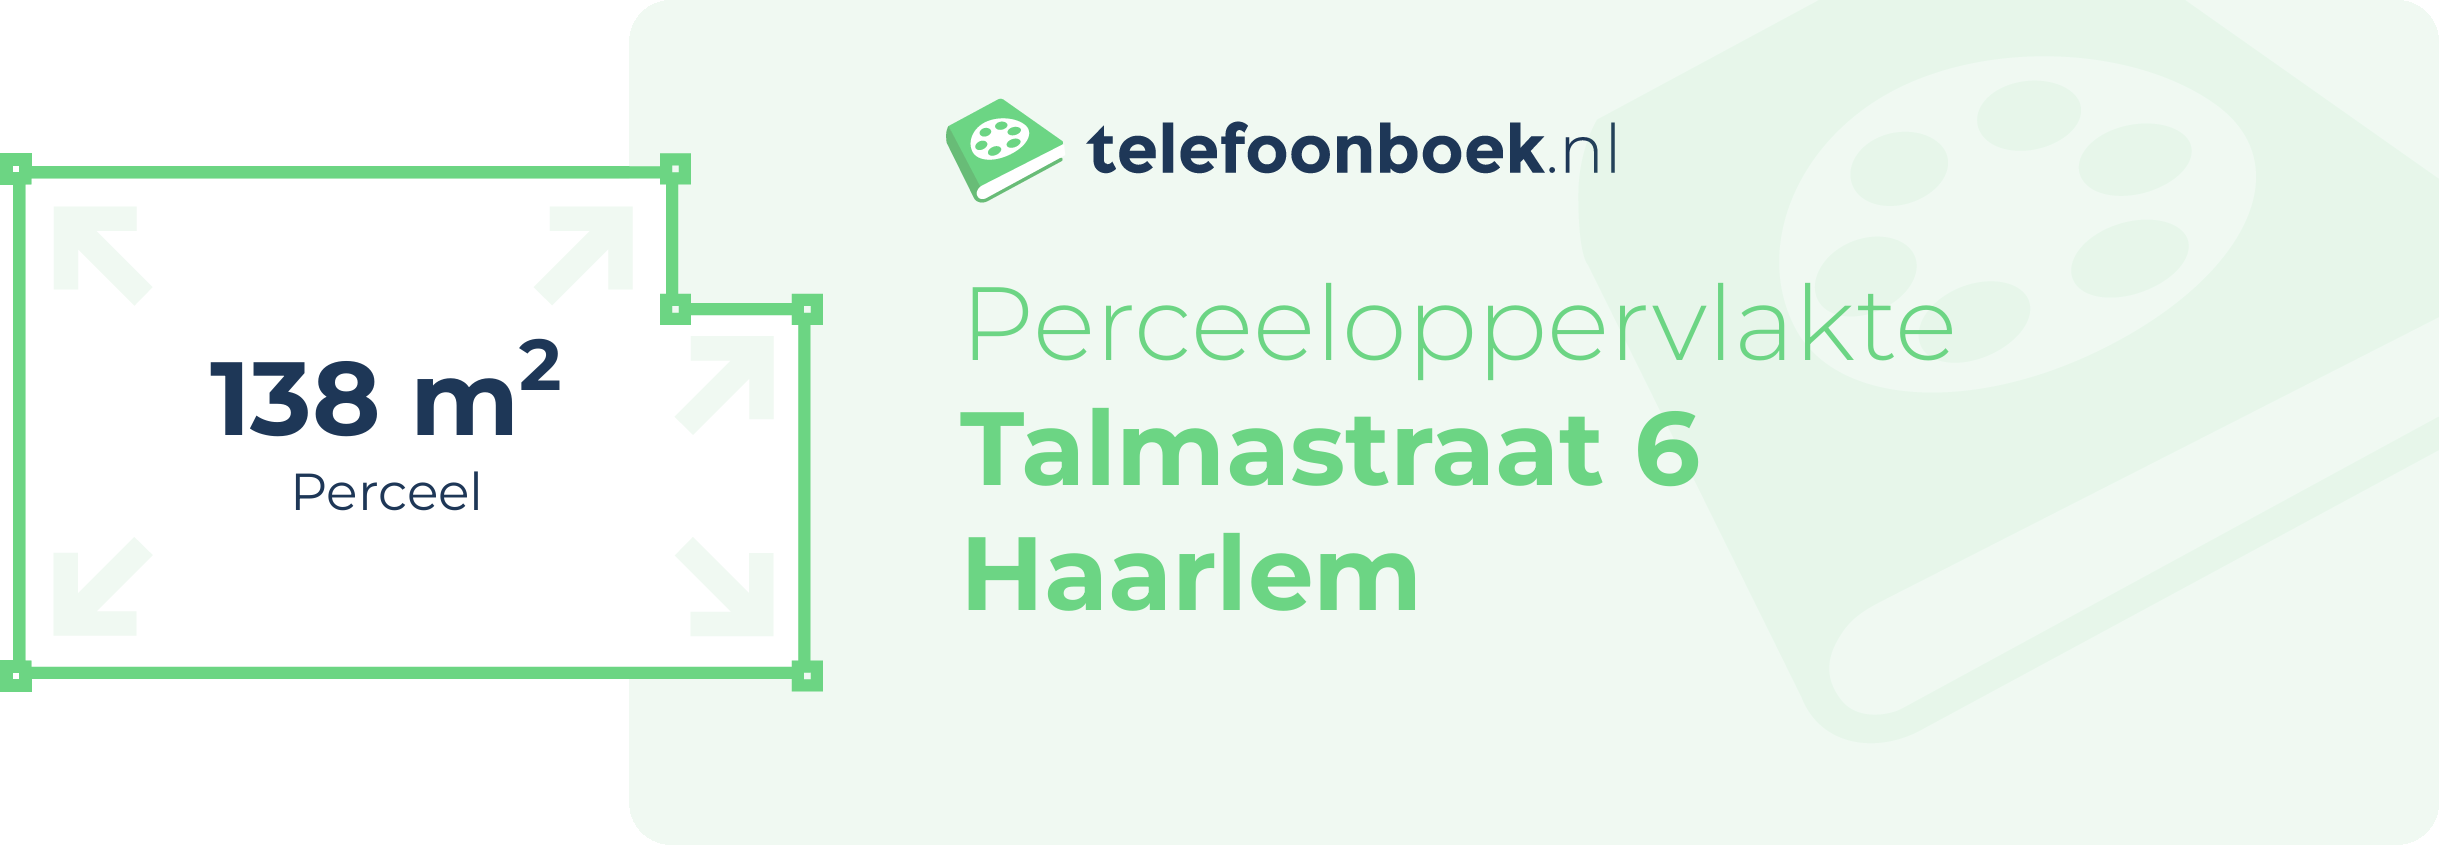 Perceeloppervlakte Talmastraat 6 Haarlem